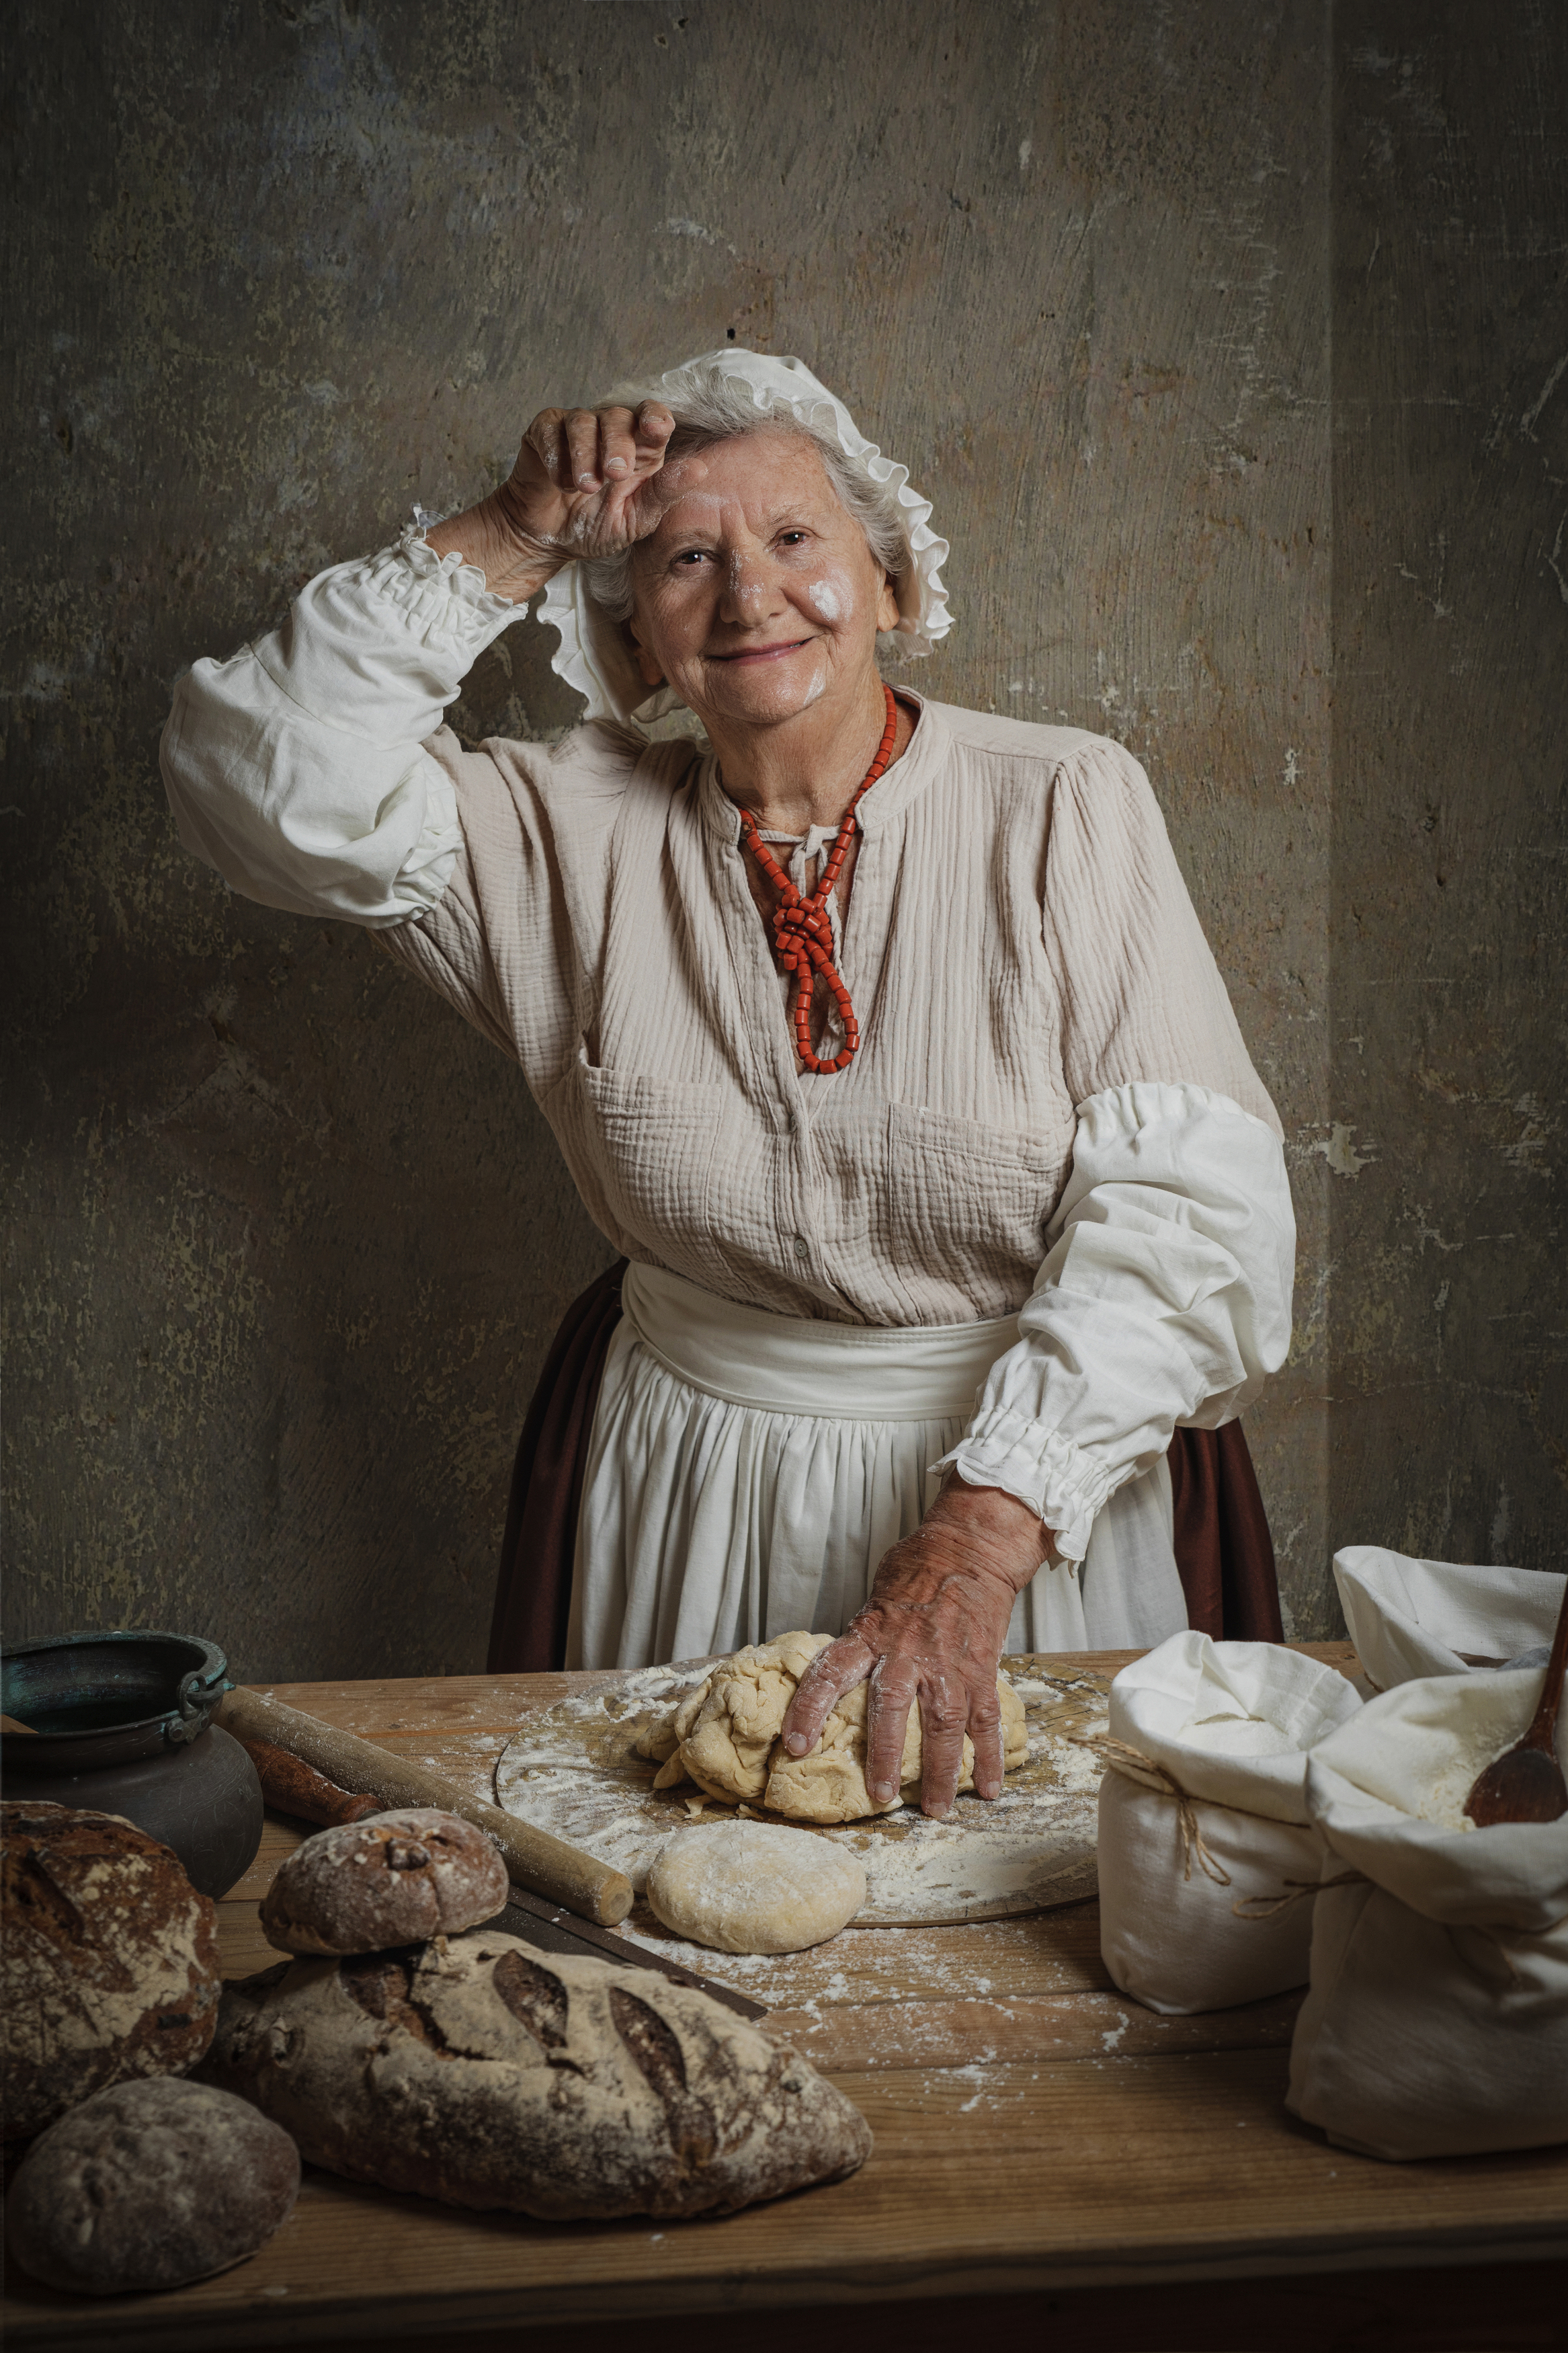 Bred, Bakery, woman, dough., Горбачева Маментьева Татьяна